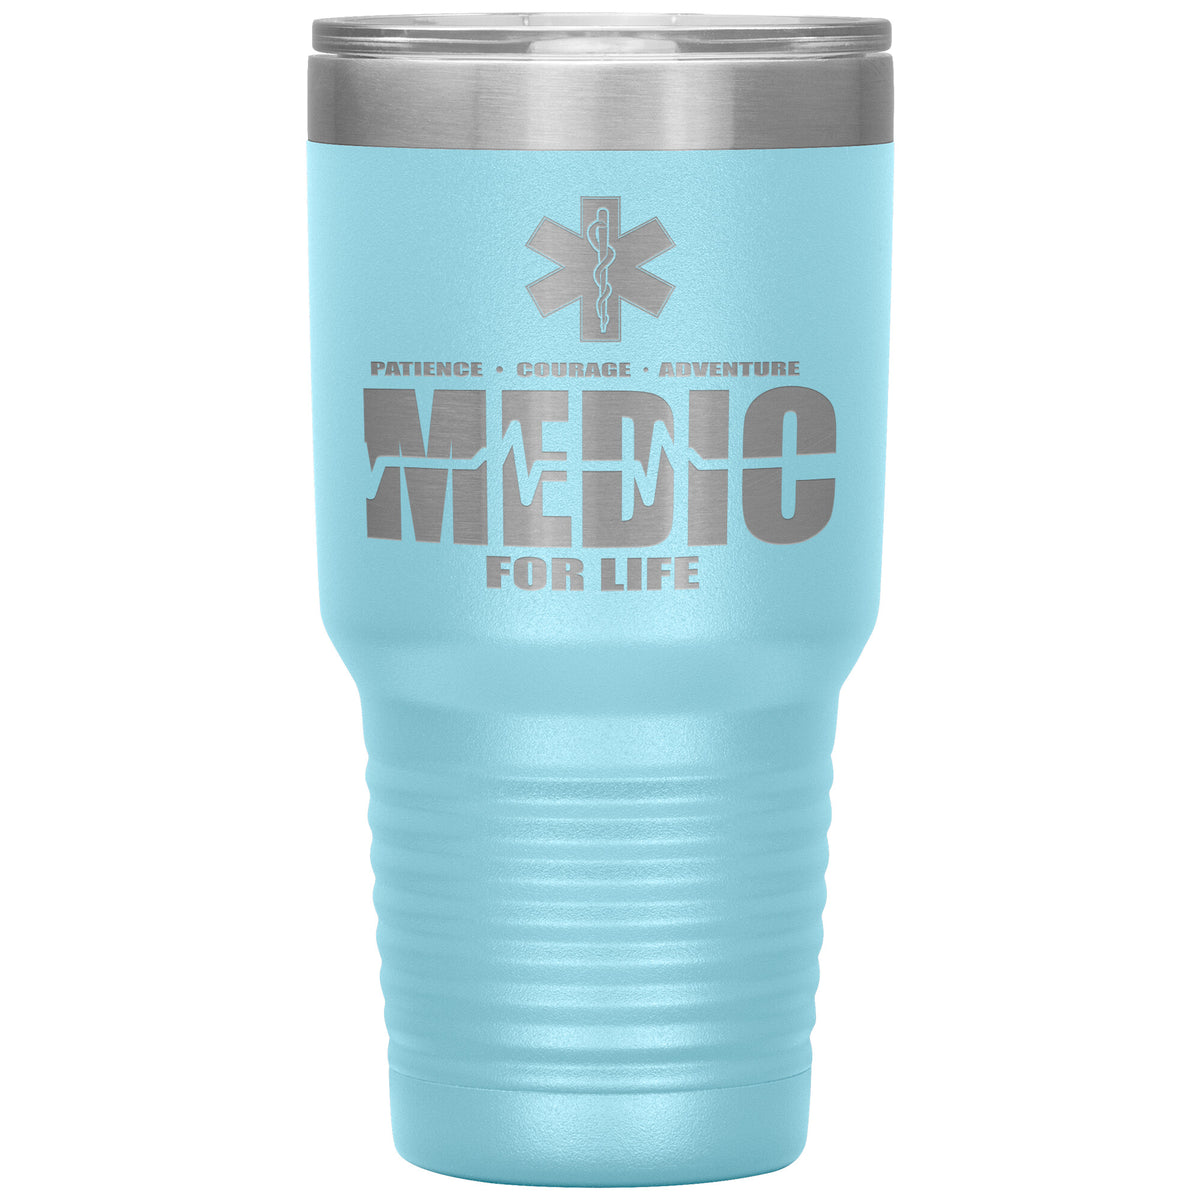 Medic for Life - 30oz Tumbler - Free Shipping